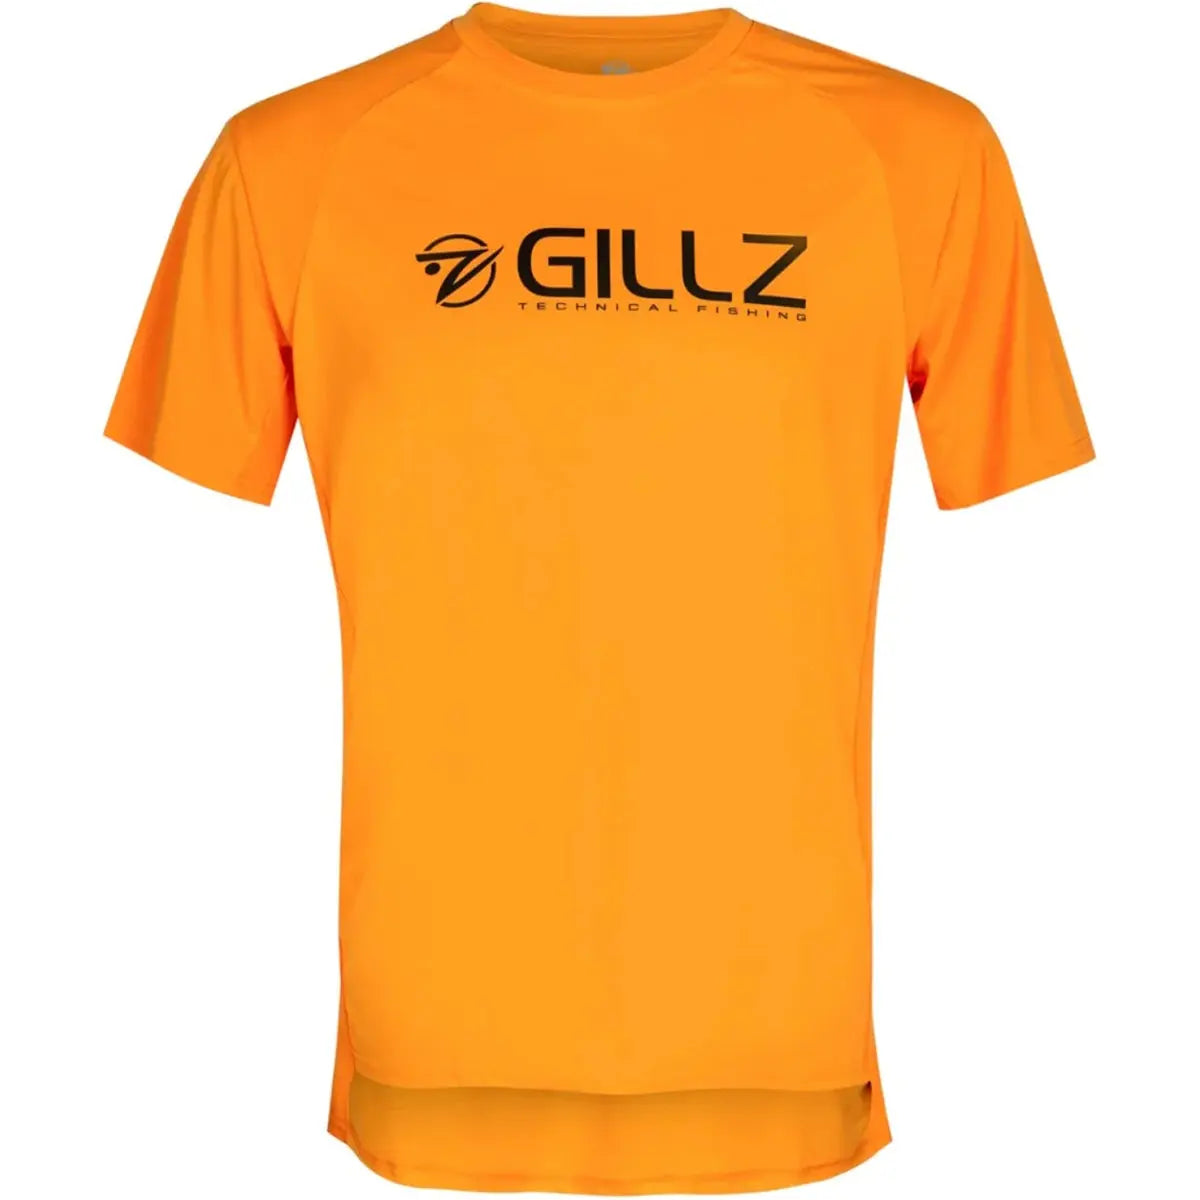 Gillz Pro Series UV T-Shirt Gillz